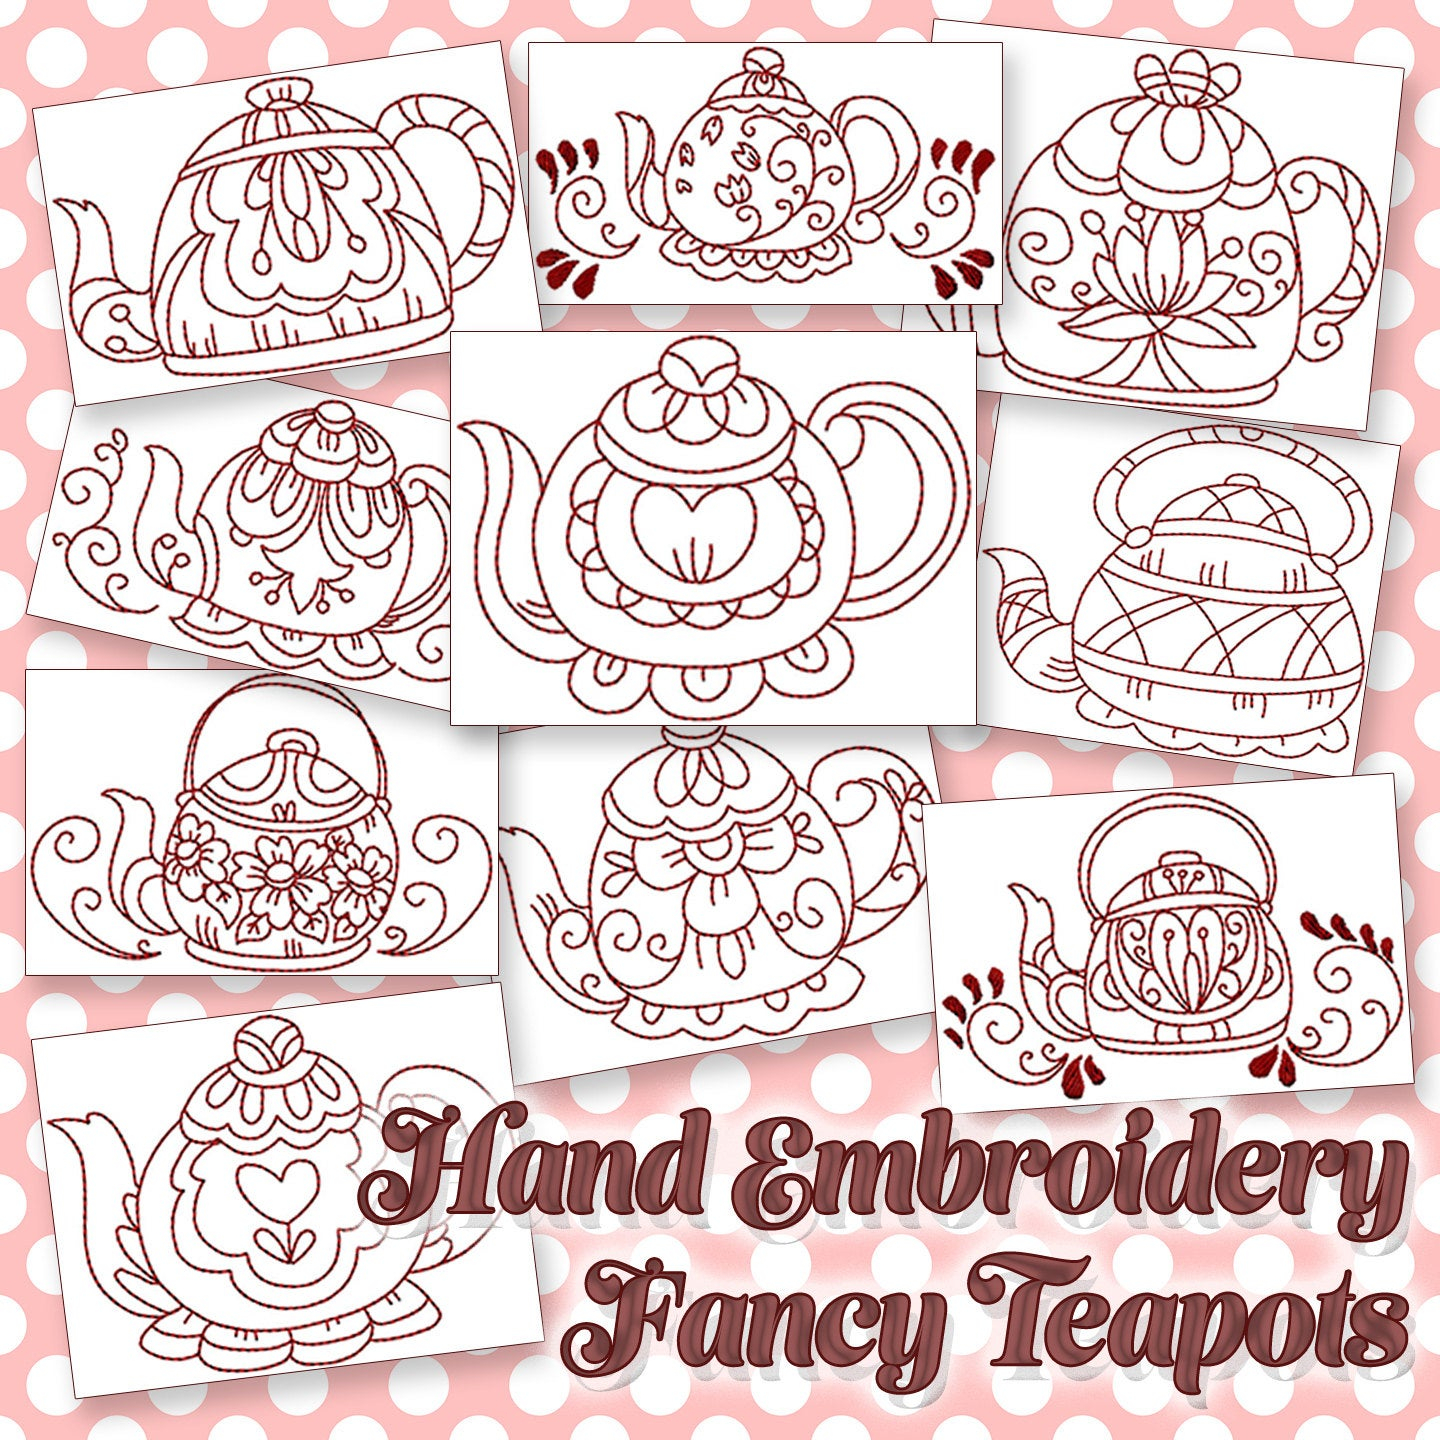 Hand Embroidery Pattern Books Hand Embroidery Designs Books Pdf Precisionxsonar